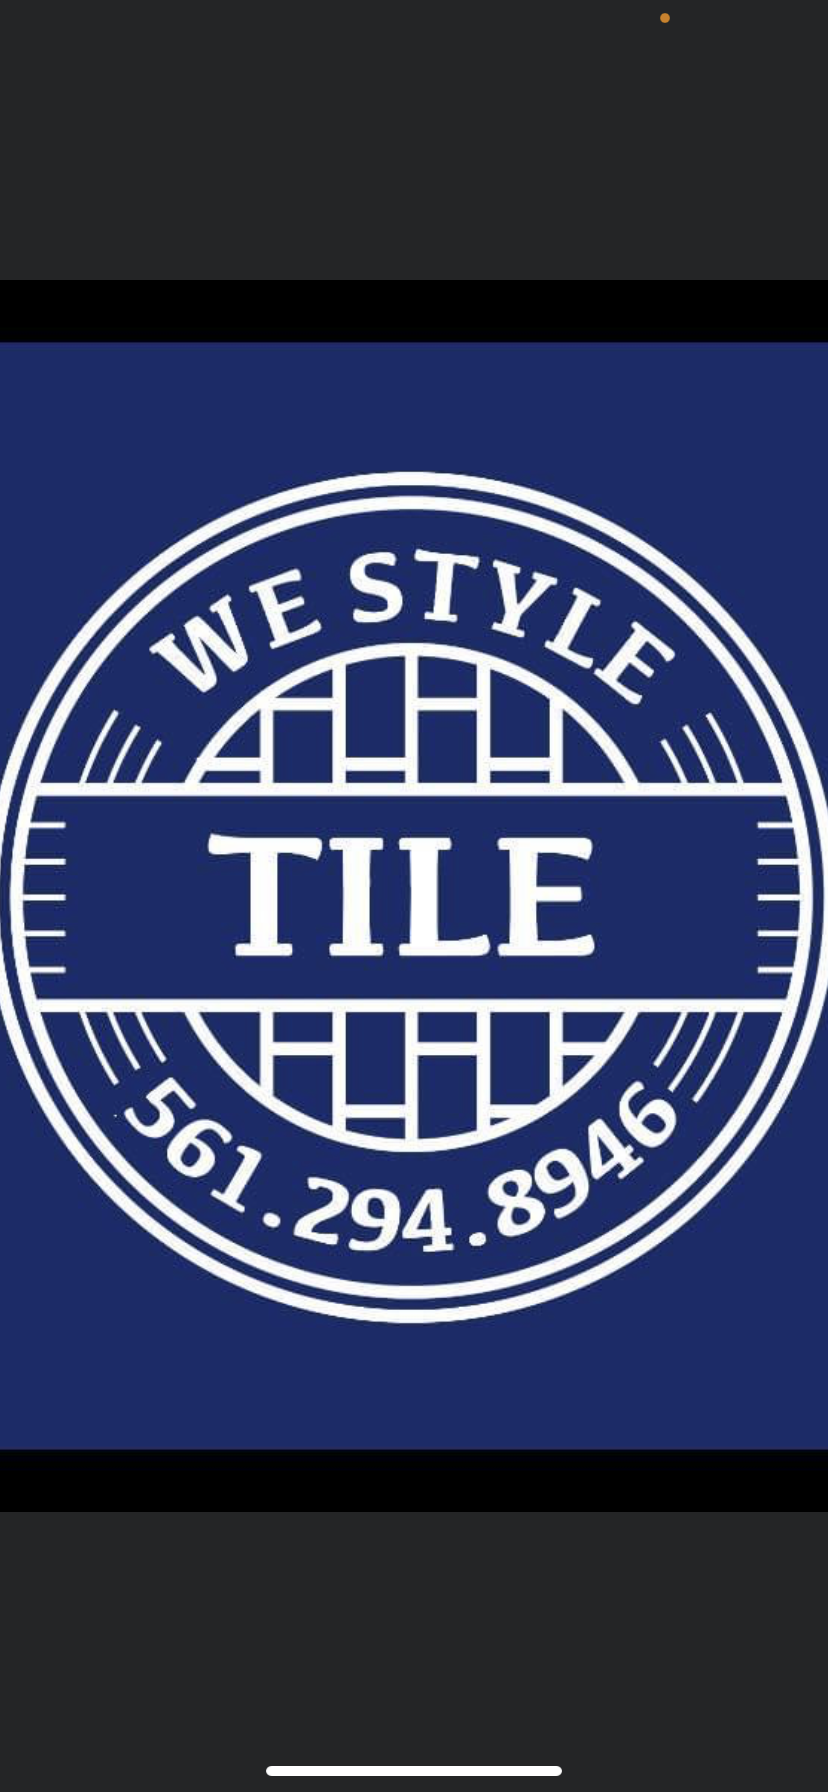 We Style Tile LLC Logo